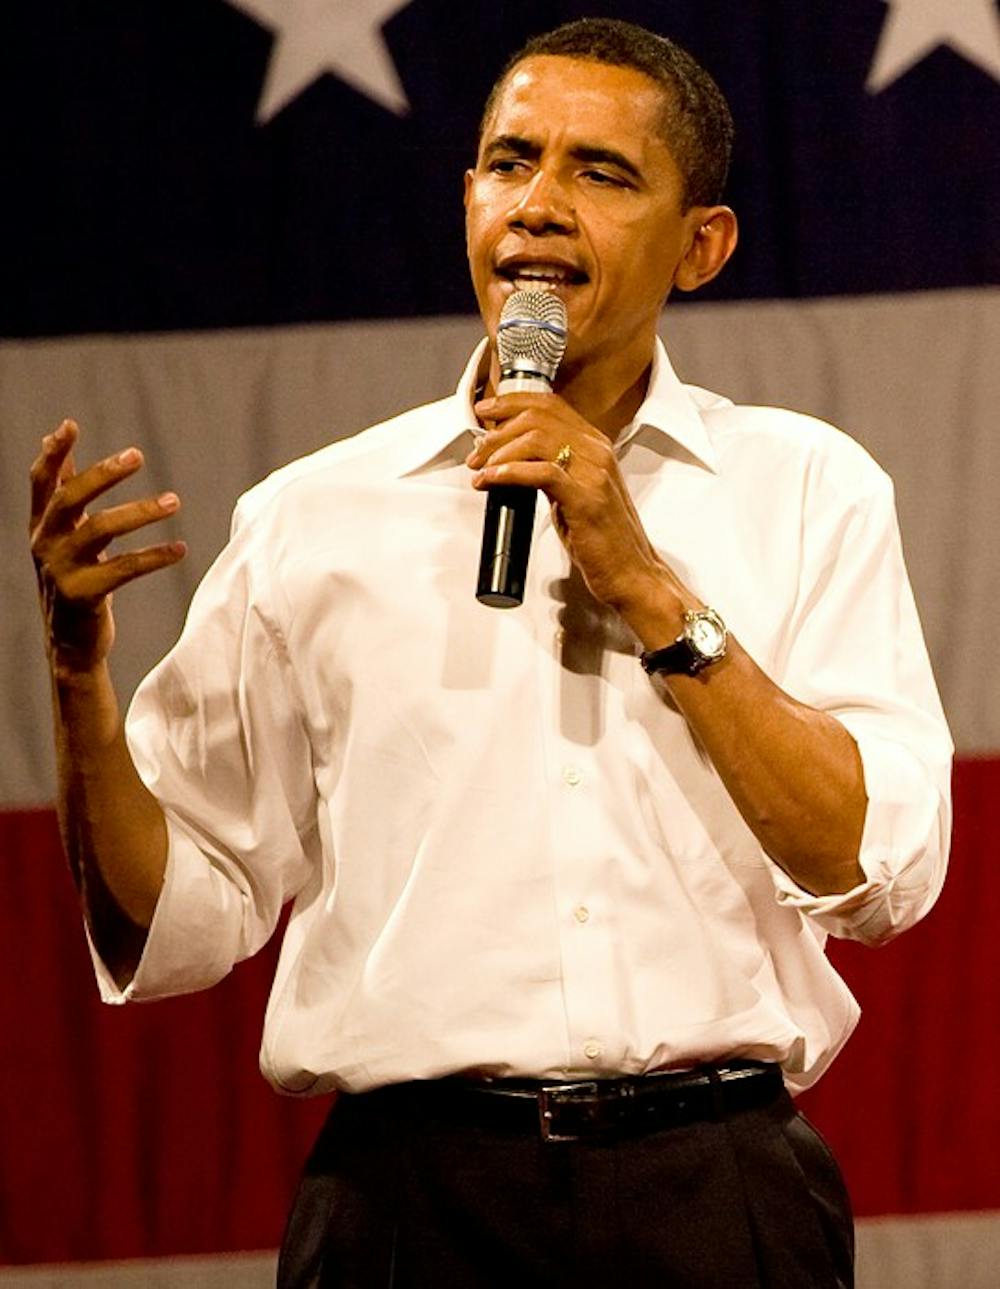 Obama speech likely to focus on economy